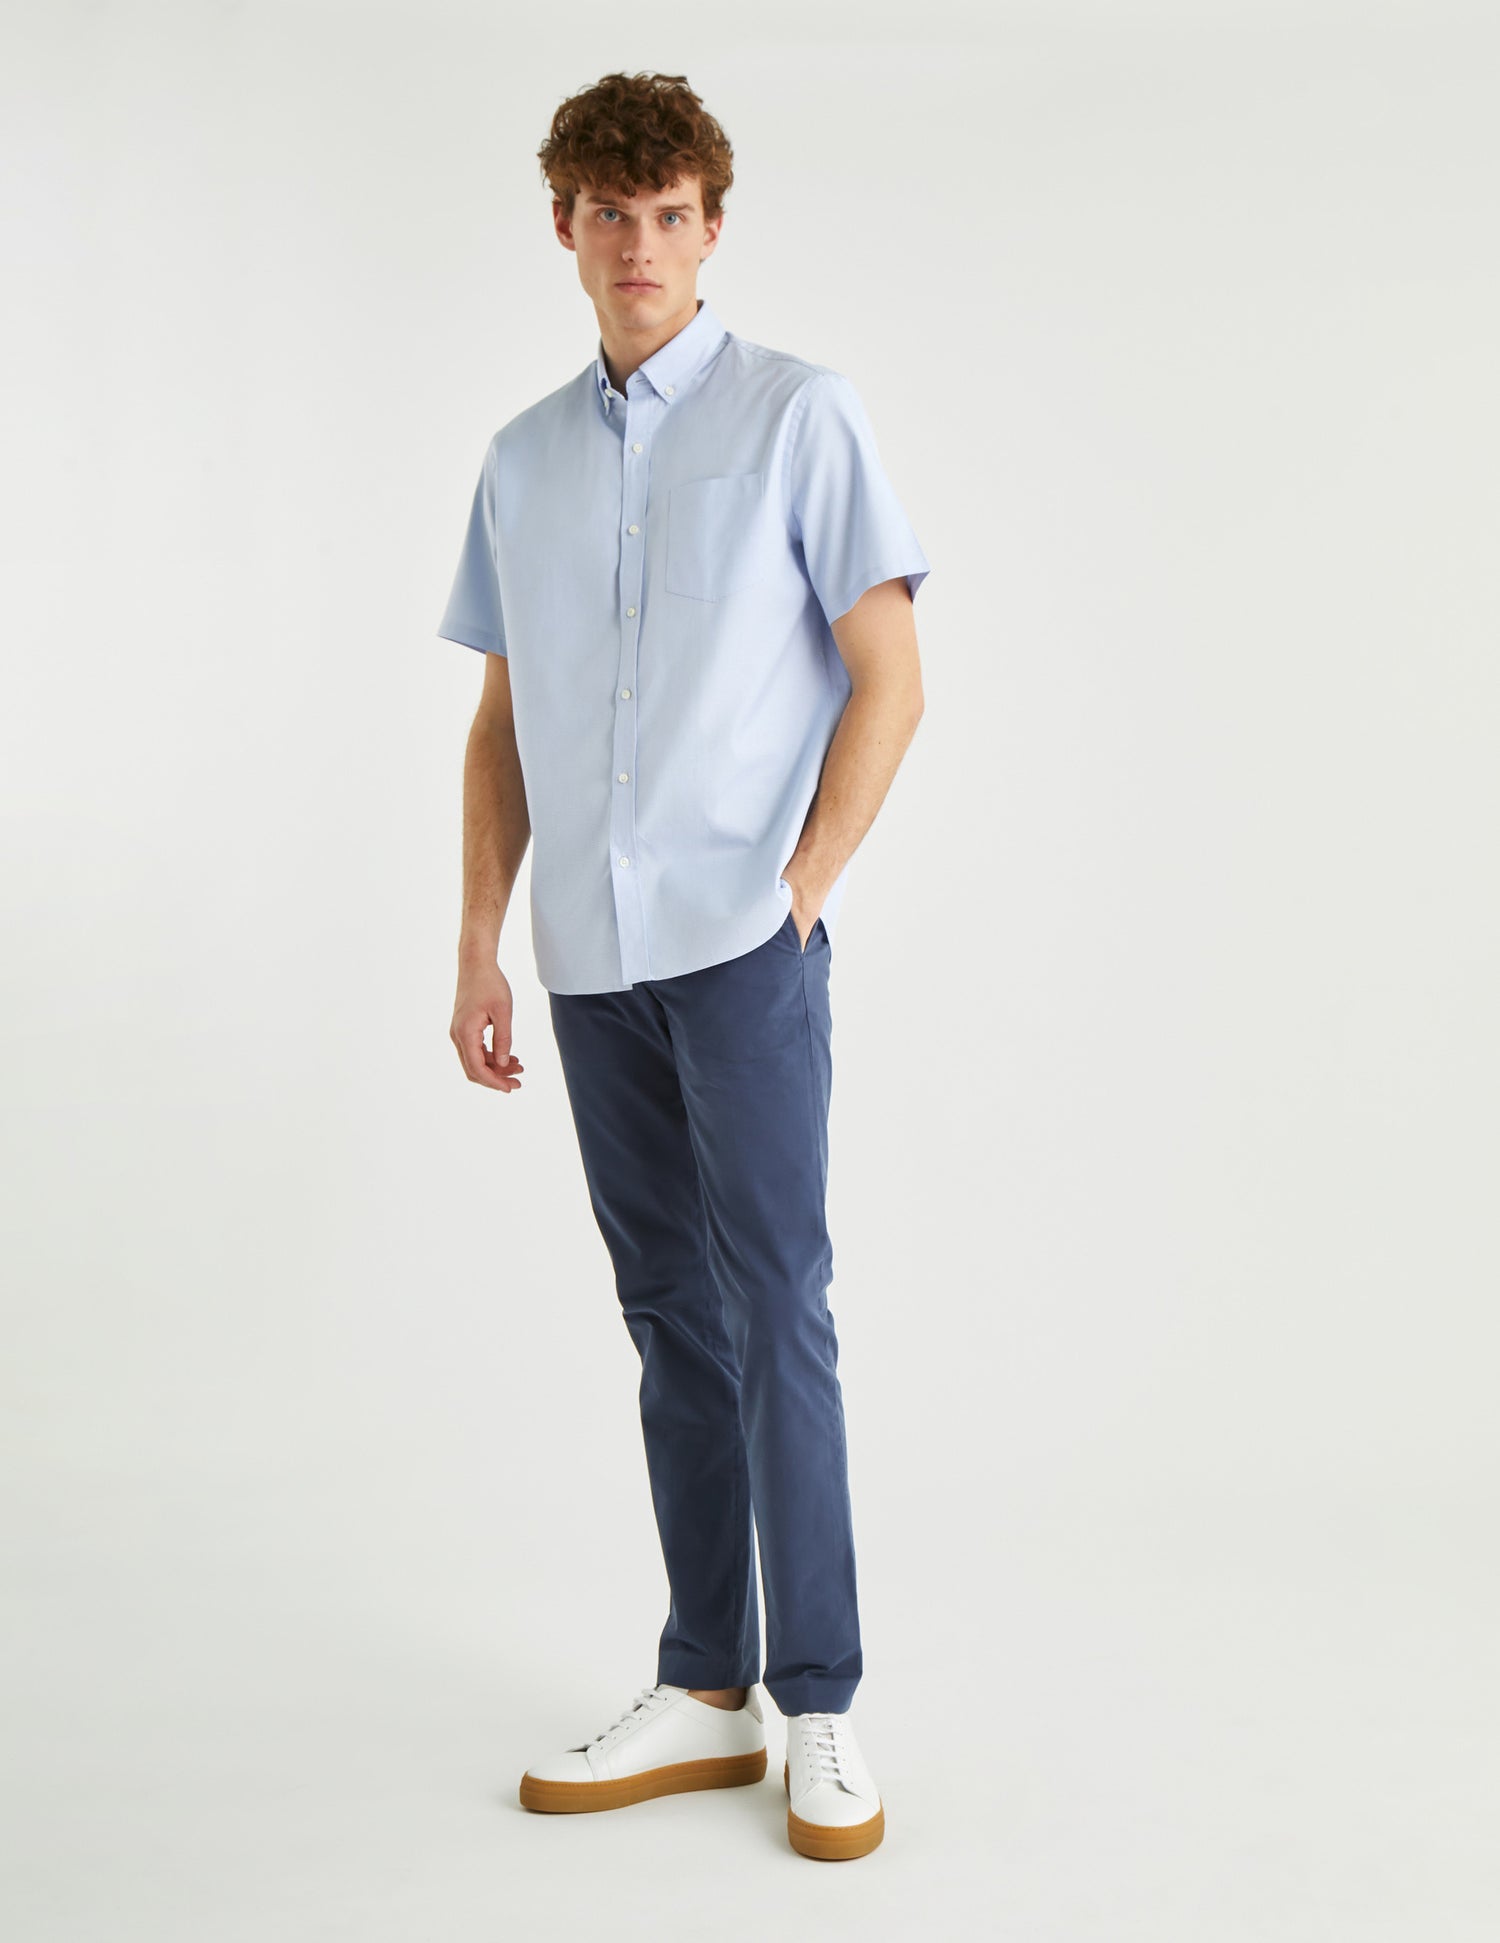 Classic shirt short sleeves blue - Shaped - American Collar#5